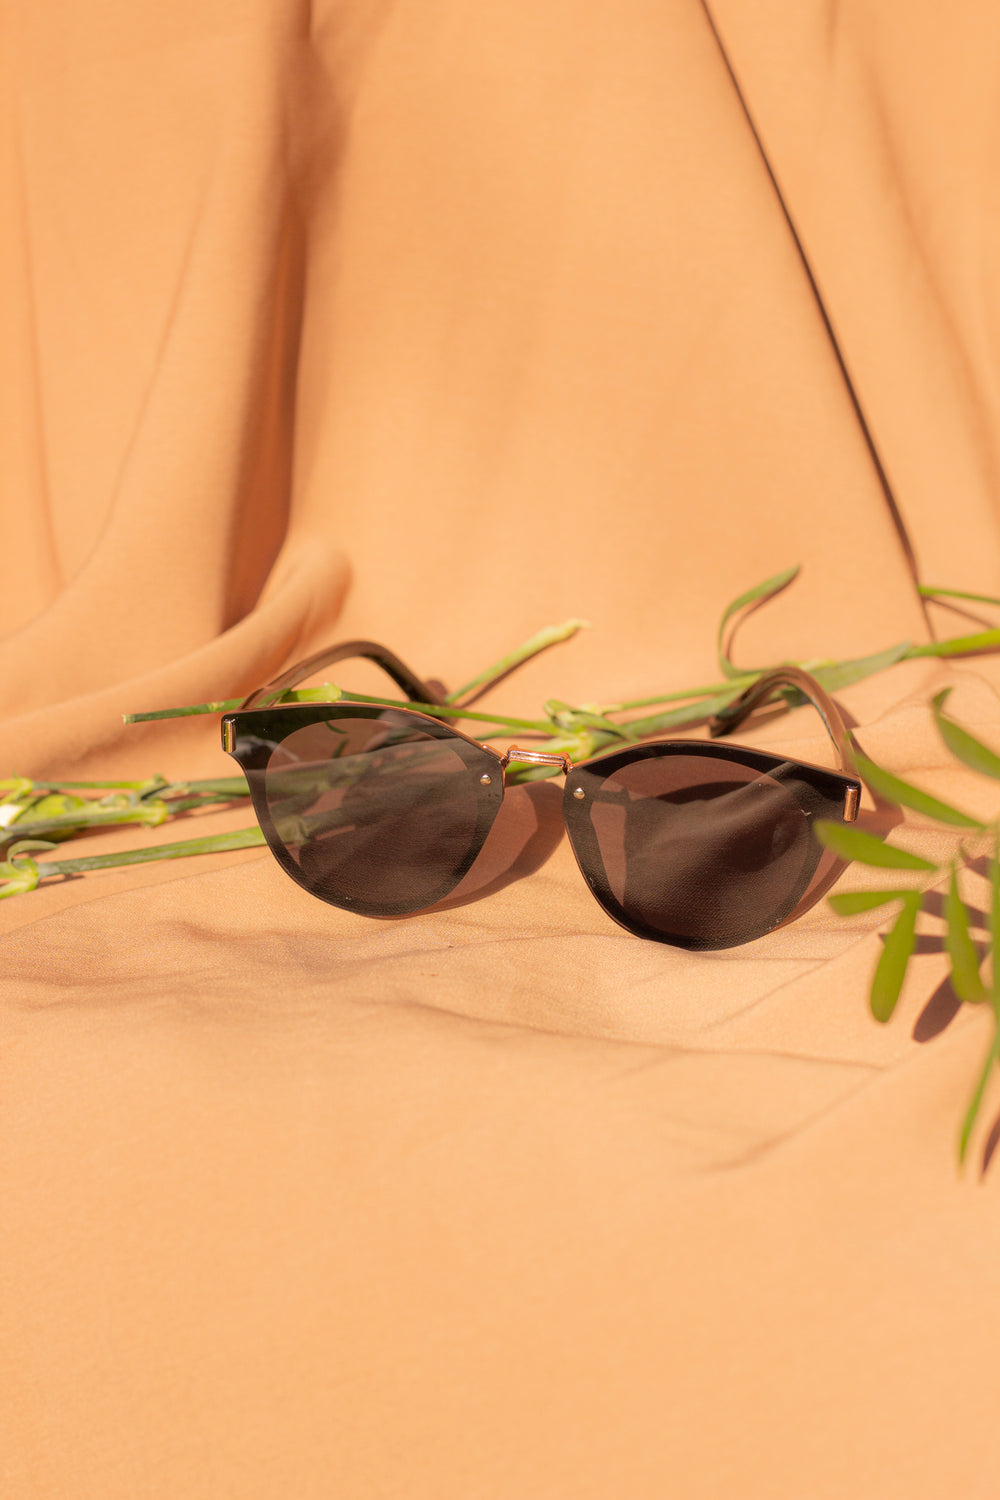 Futuristic Spy Style Sunglasses - Sugar + Style